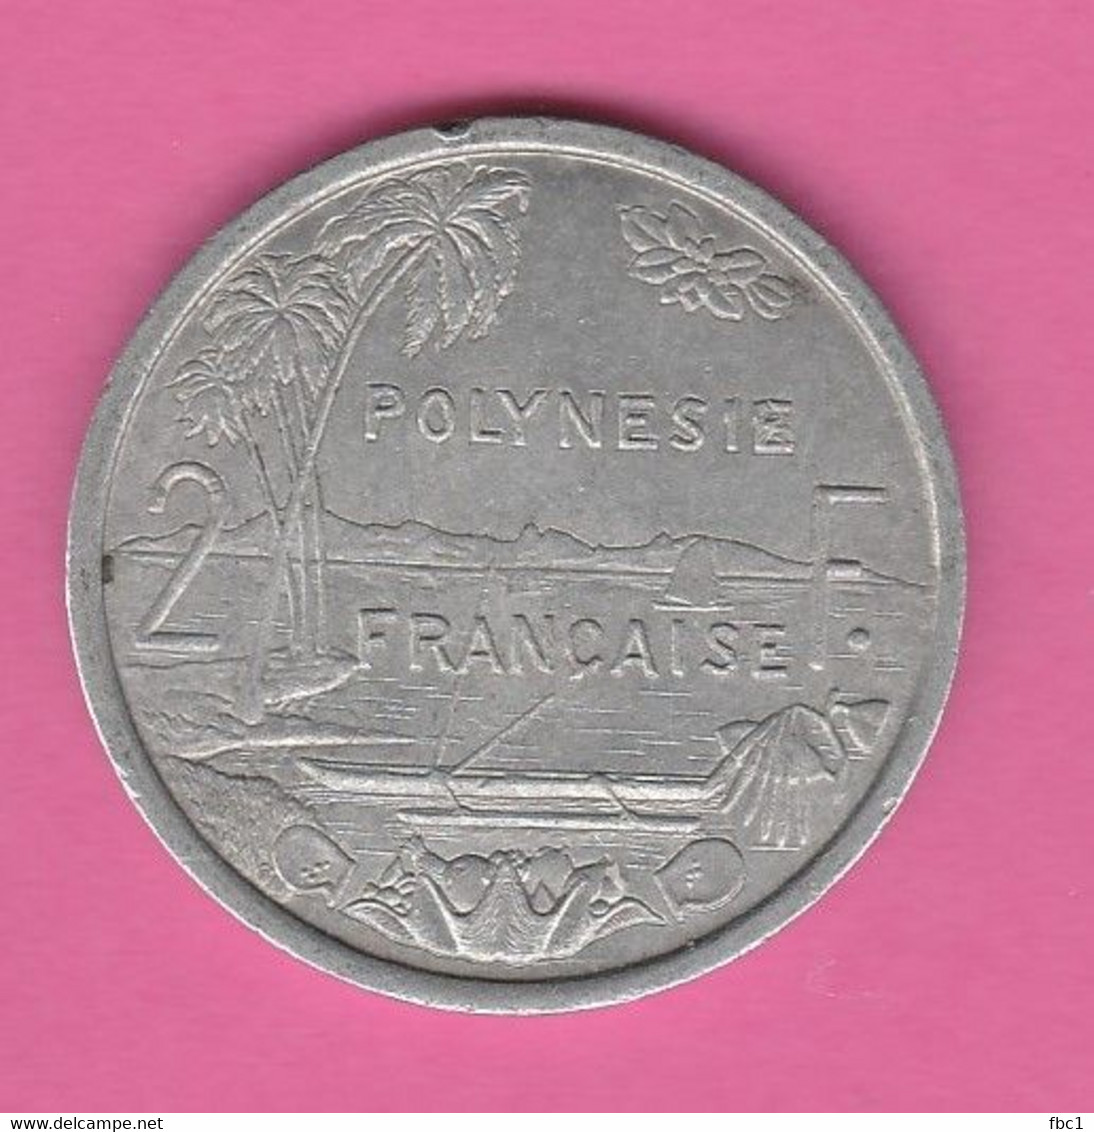 Polynésie Française - 2 Francs 1979 - French Polynesia